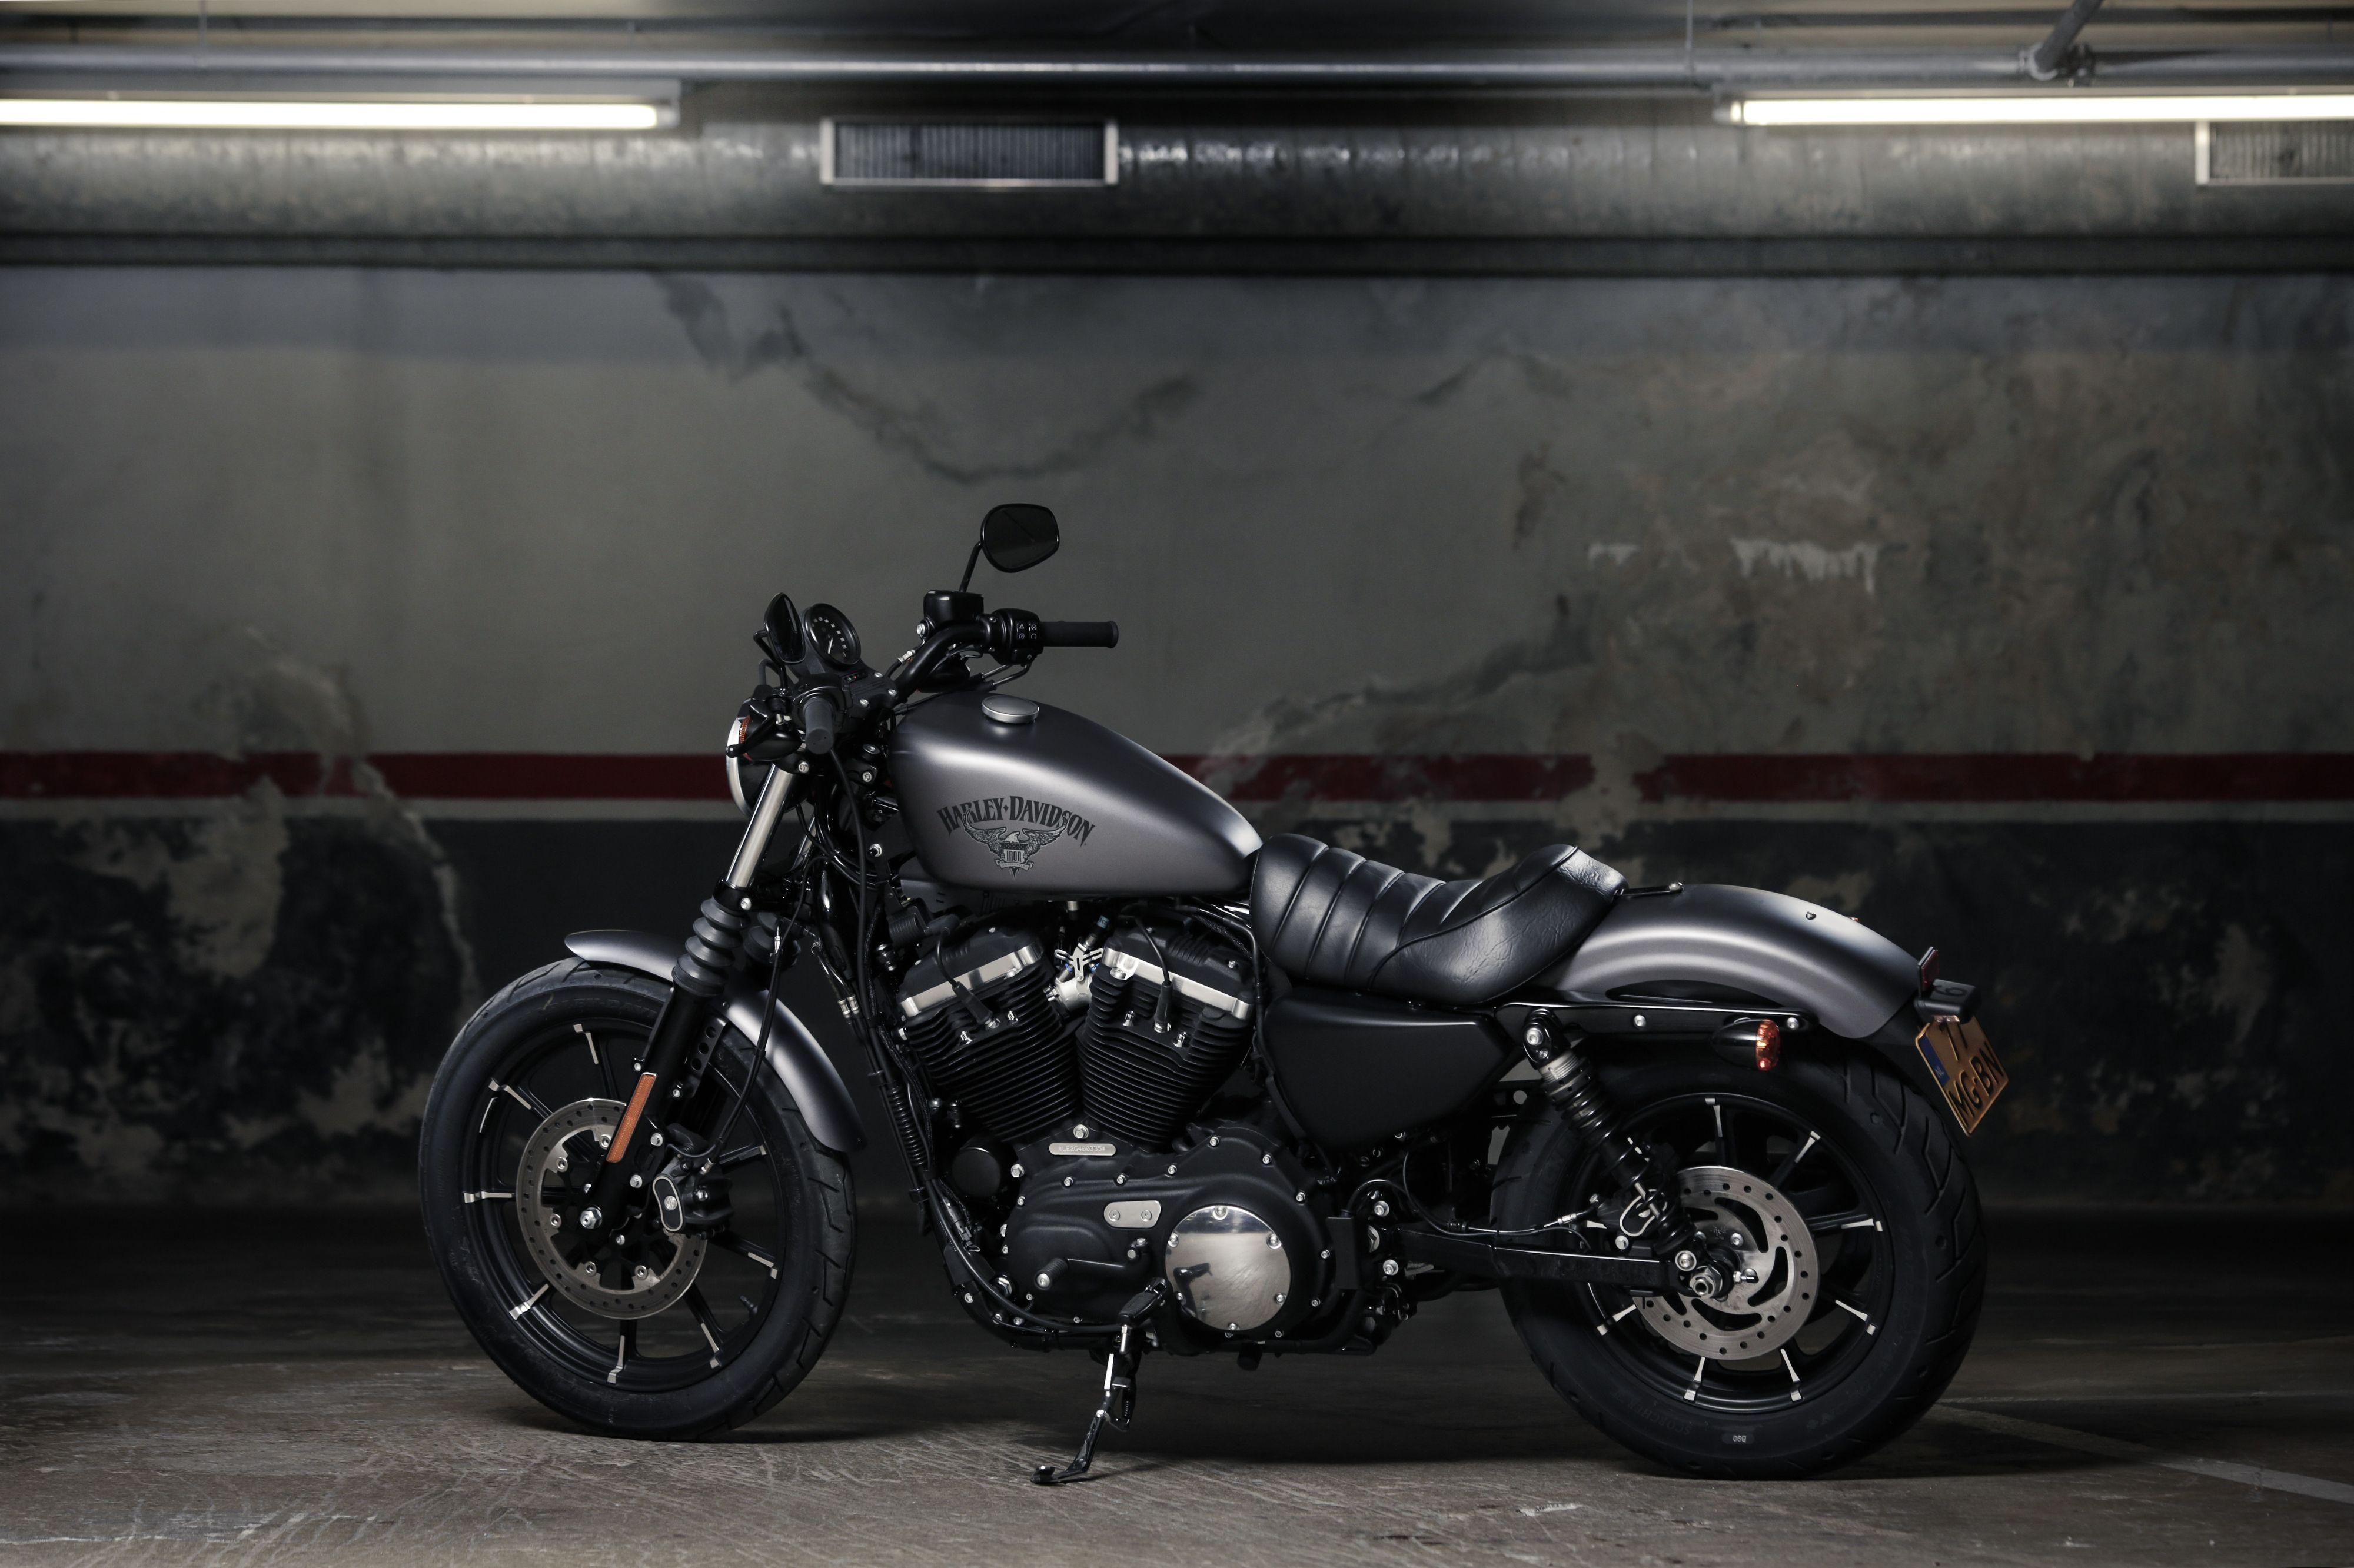 Harley Davidson XL883N Iron